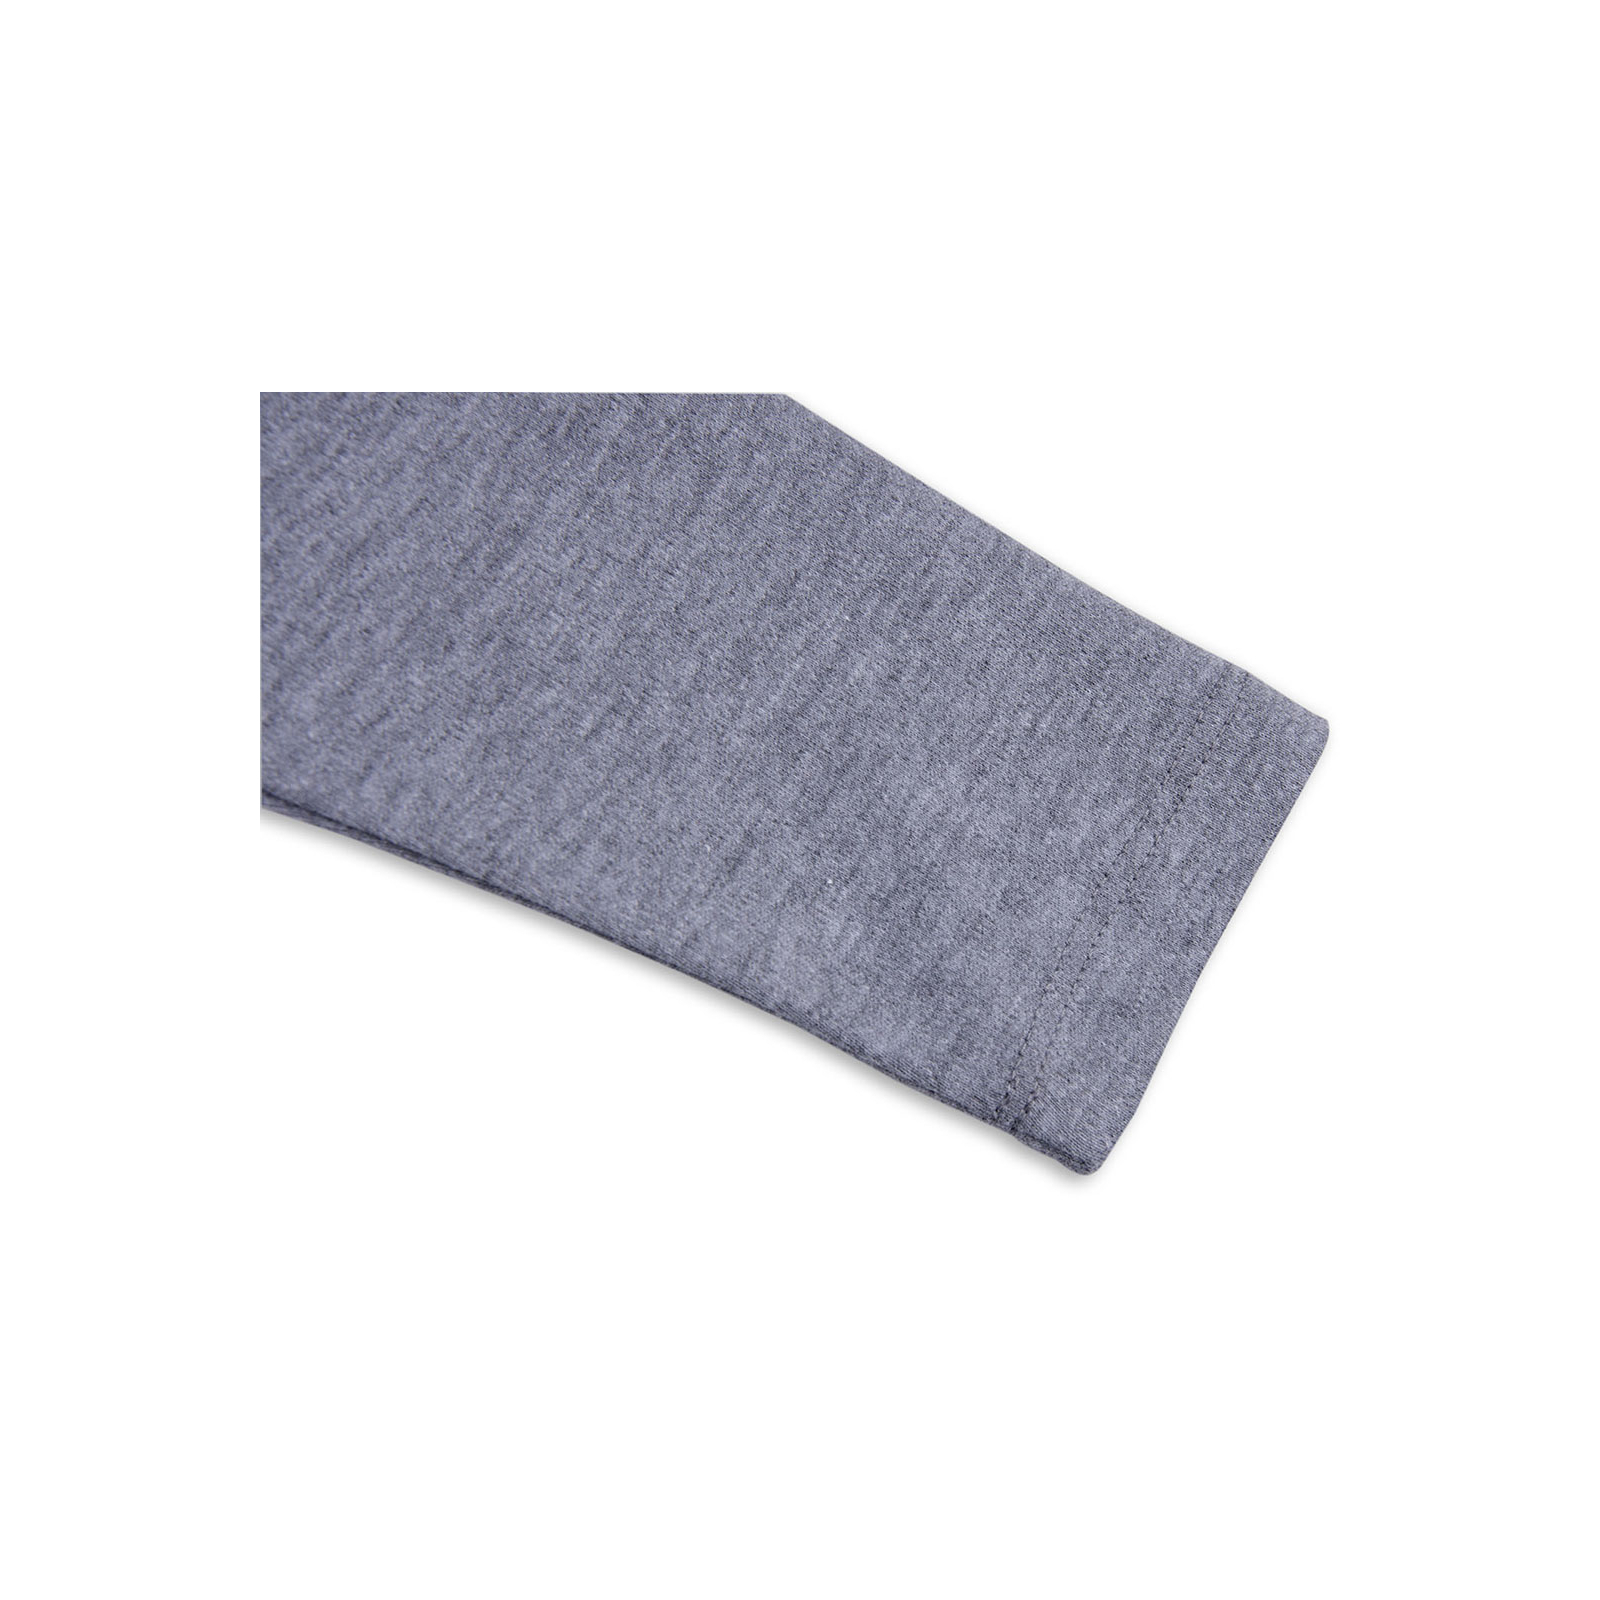 Кофта Lovetti водолазка серая меланжевая (1011-98-gray) изображение 4